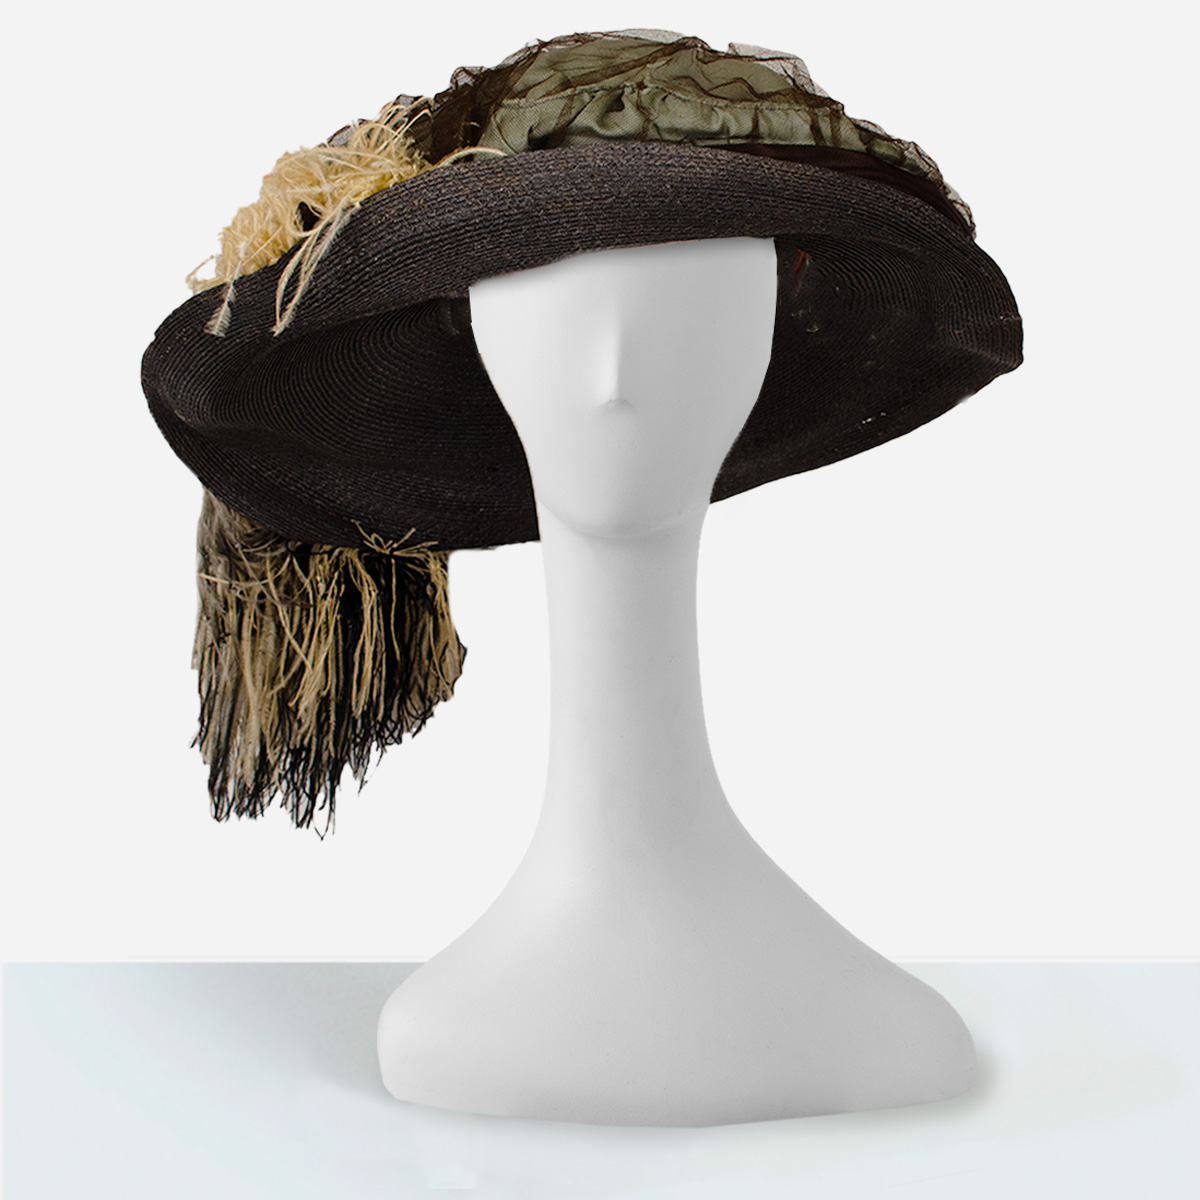 Vintage Edwardian Hat. 1900s merry widow hat